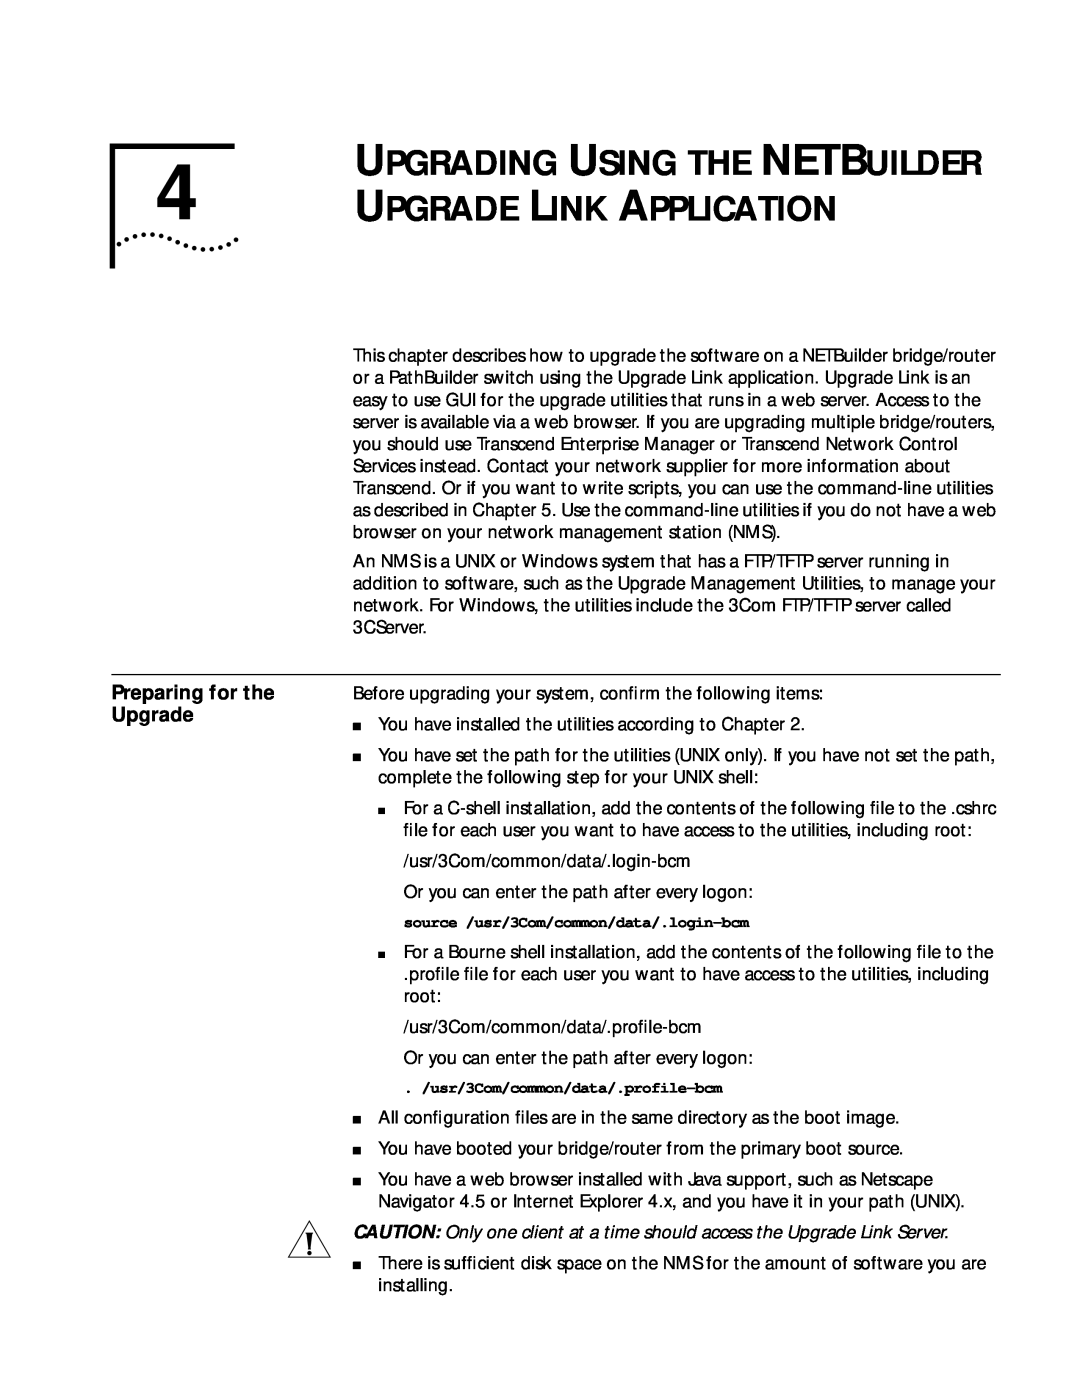 3Com ENTERPRISE OS 11.3 manual UPGRADING USING THE NETBUILDER 4 UPGRADE LINK APPLICATION, Preparing for the Upgrade 